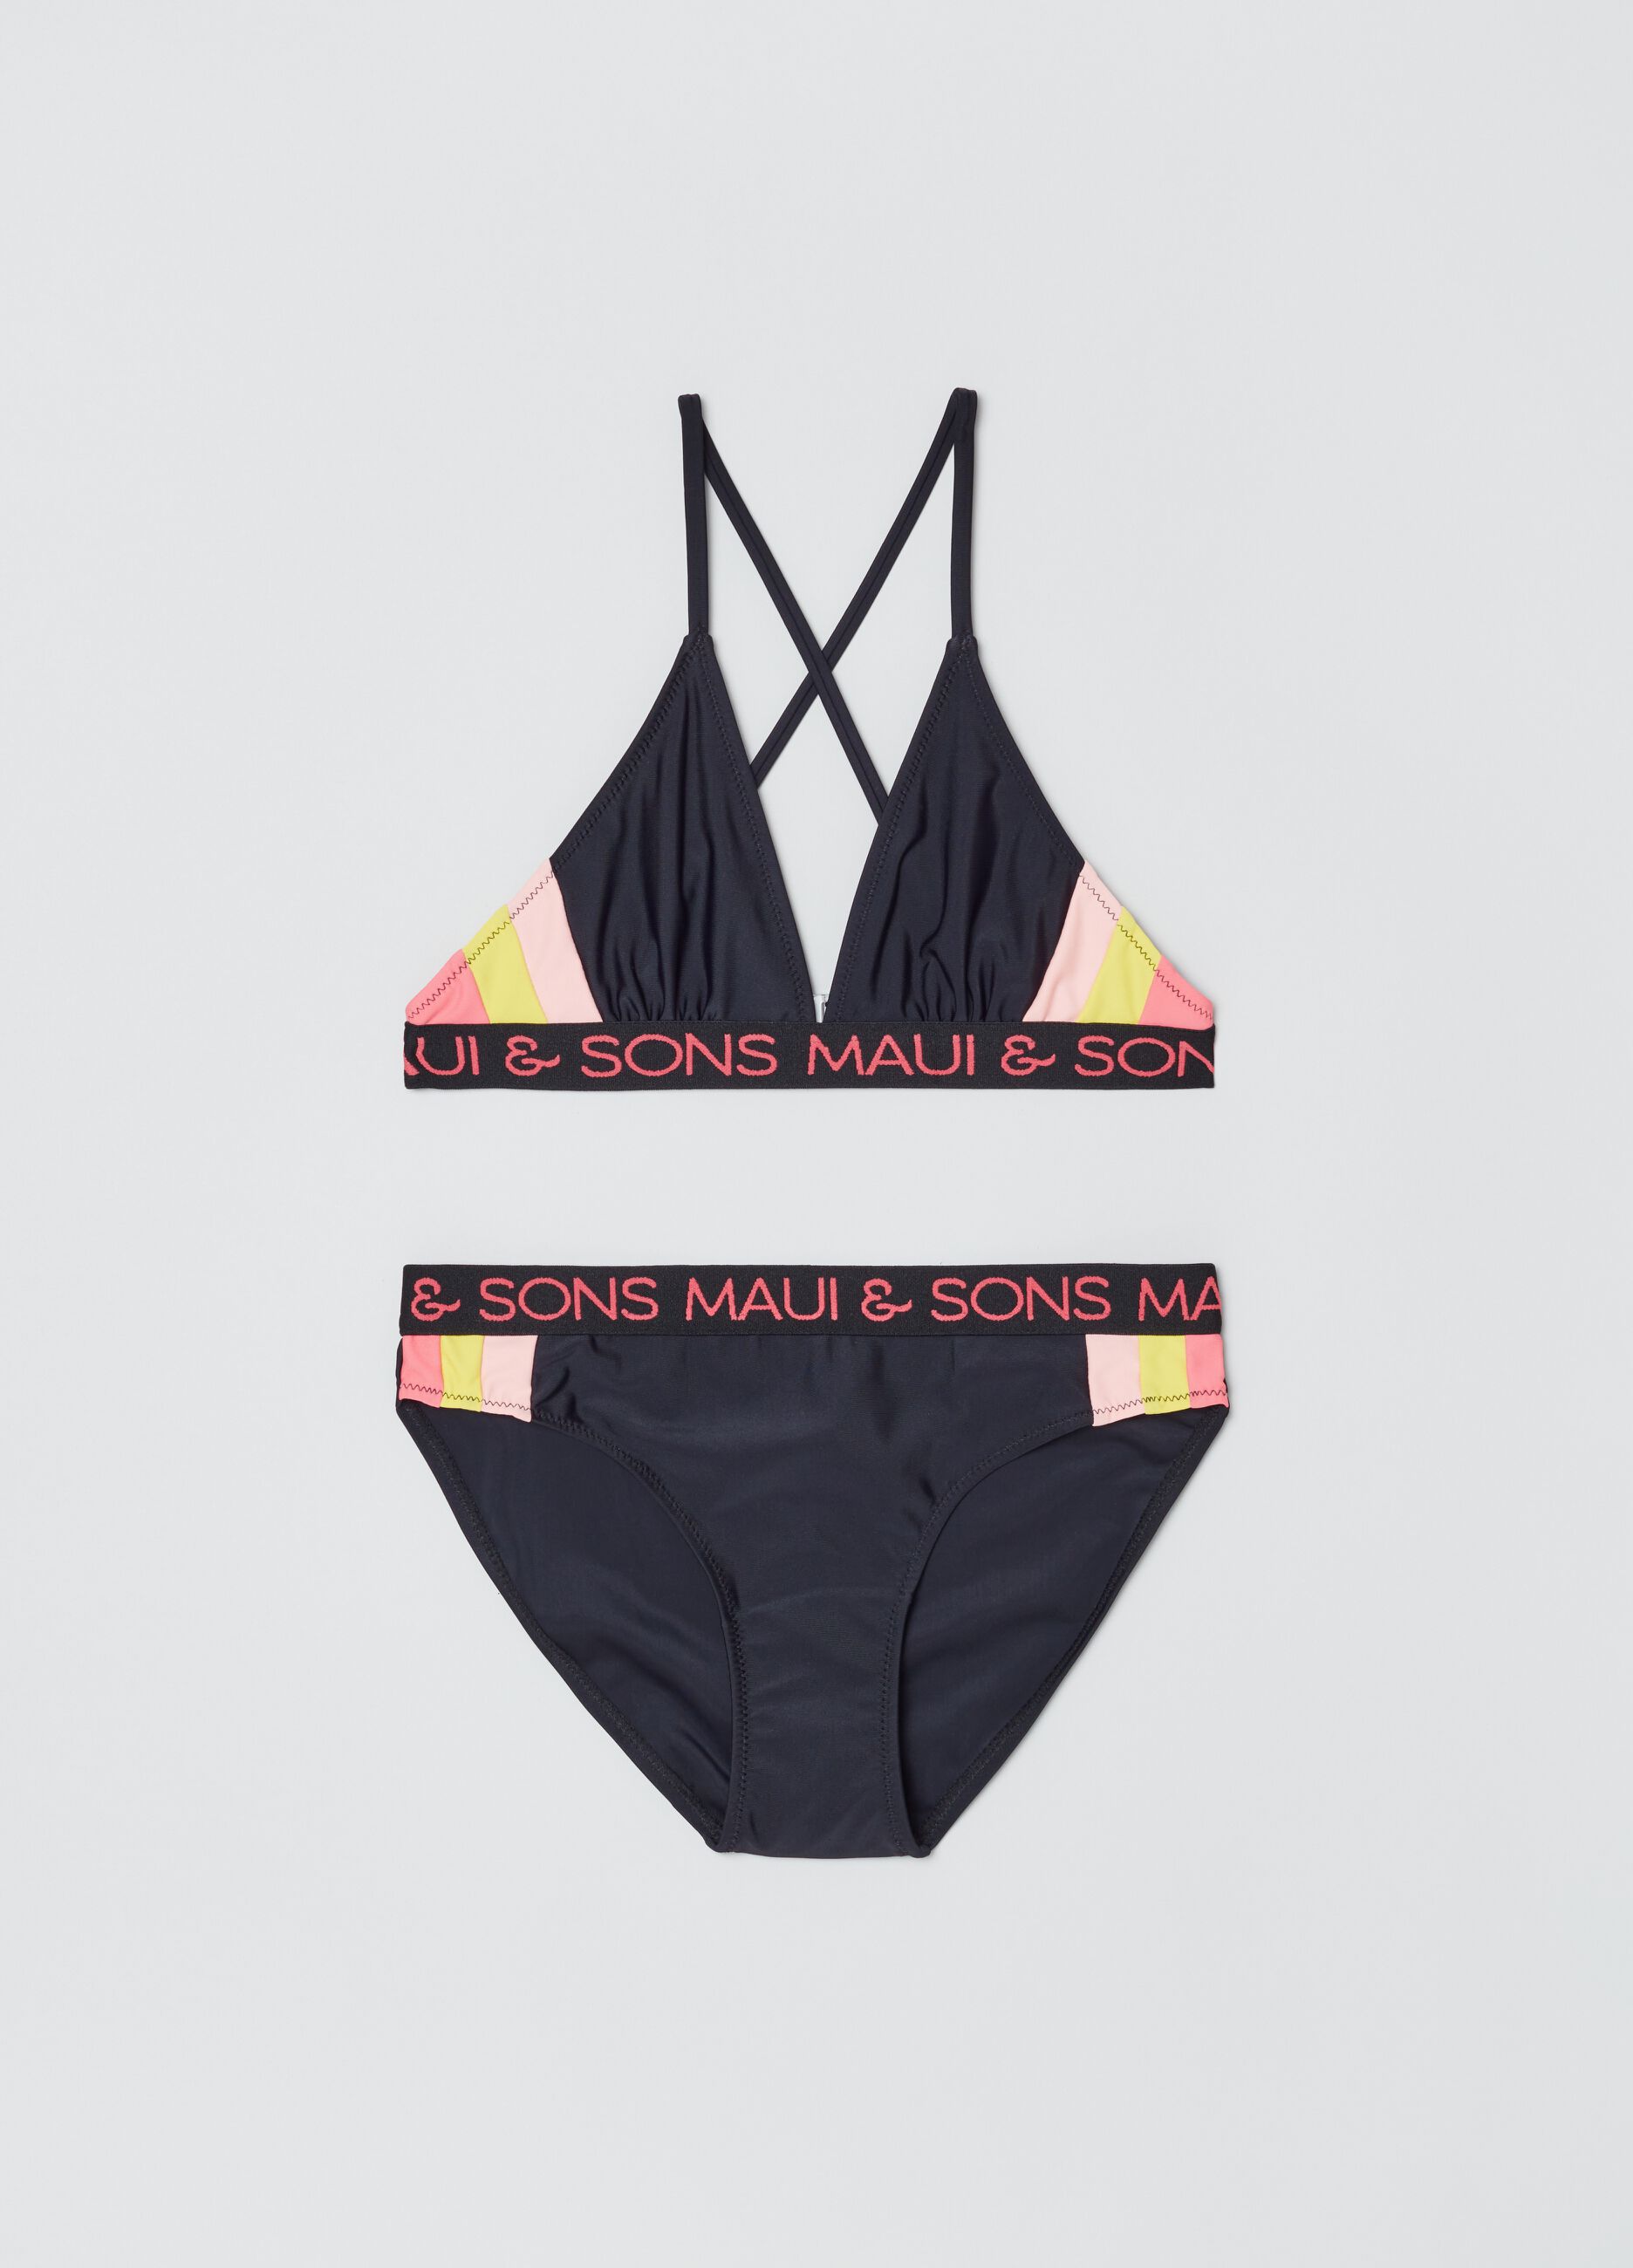 Maui and Sons bikini with striped details